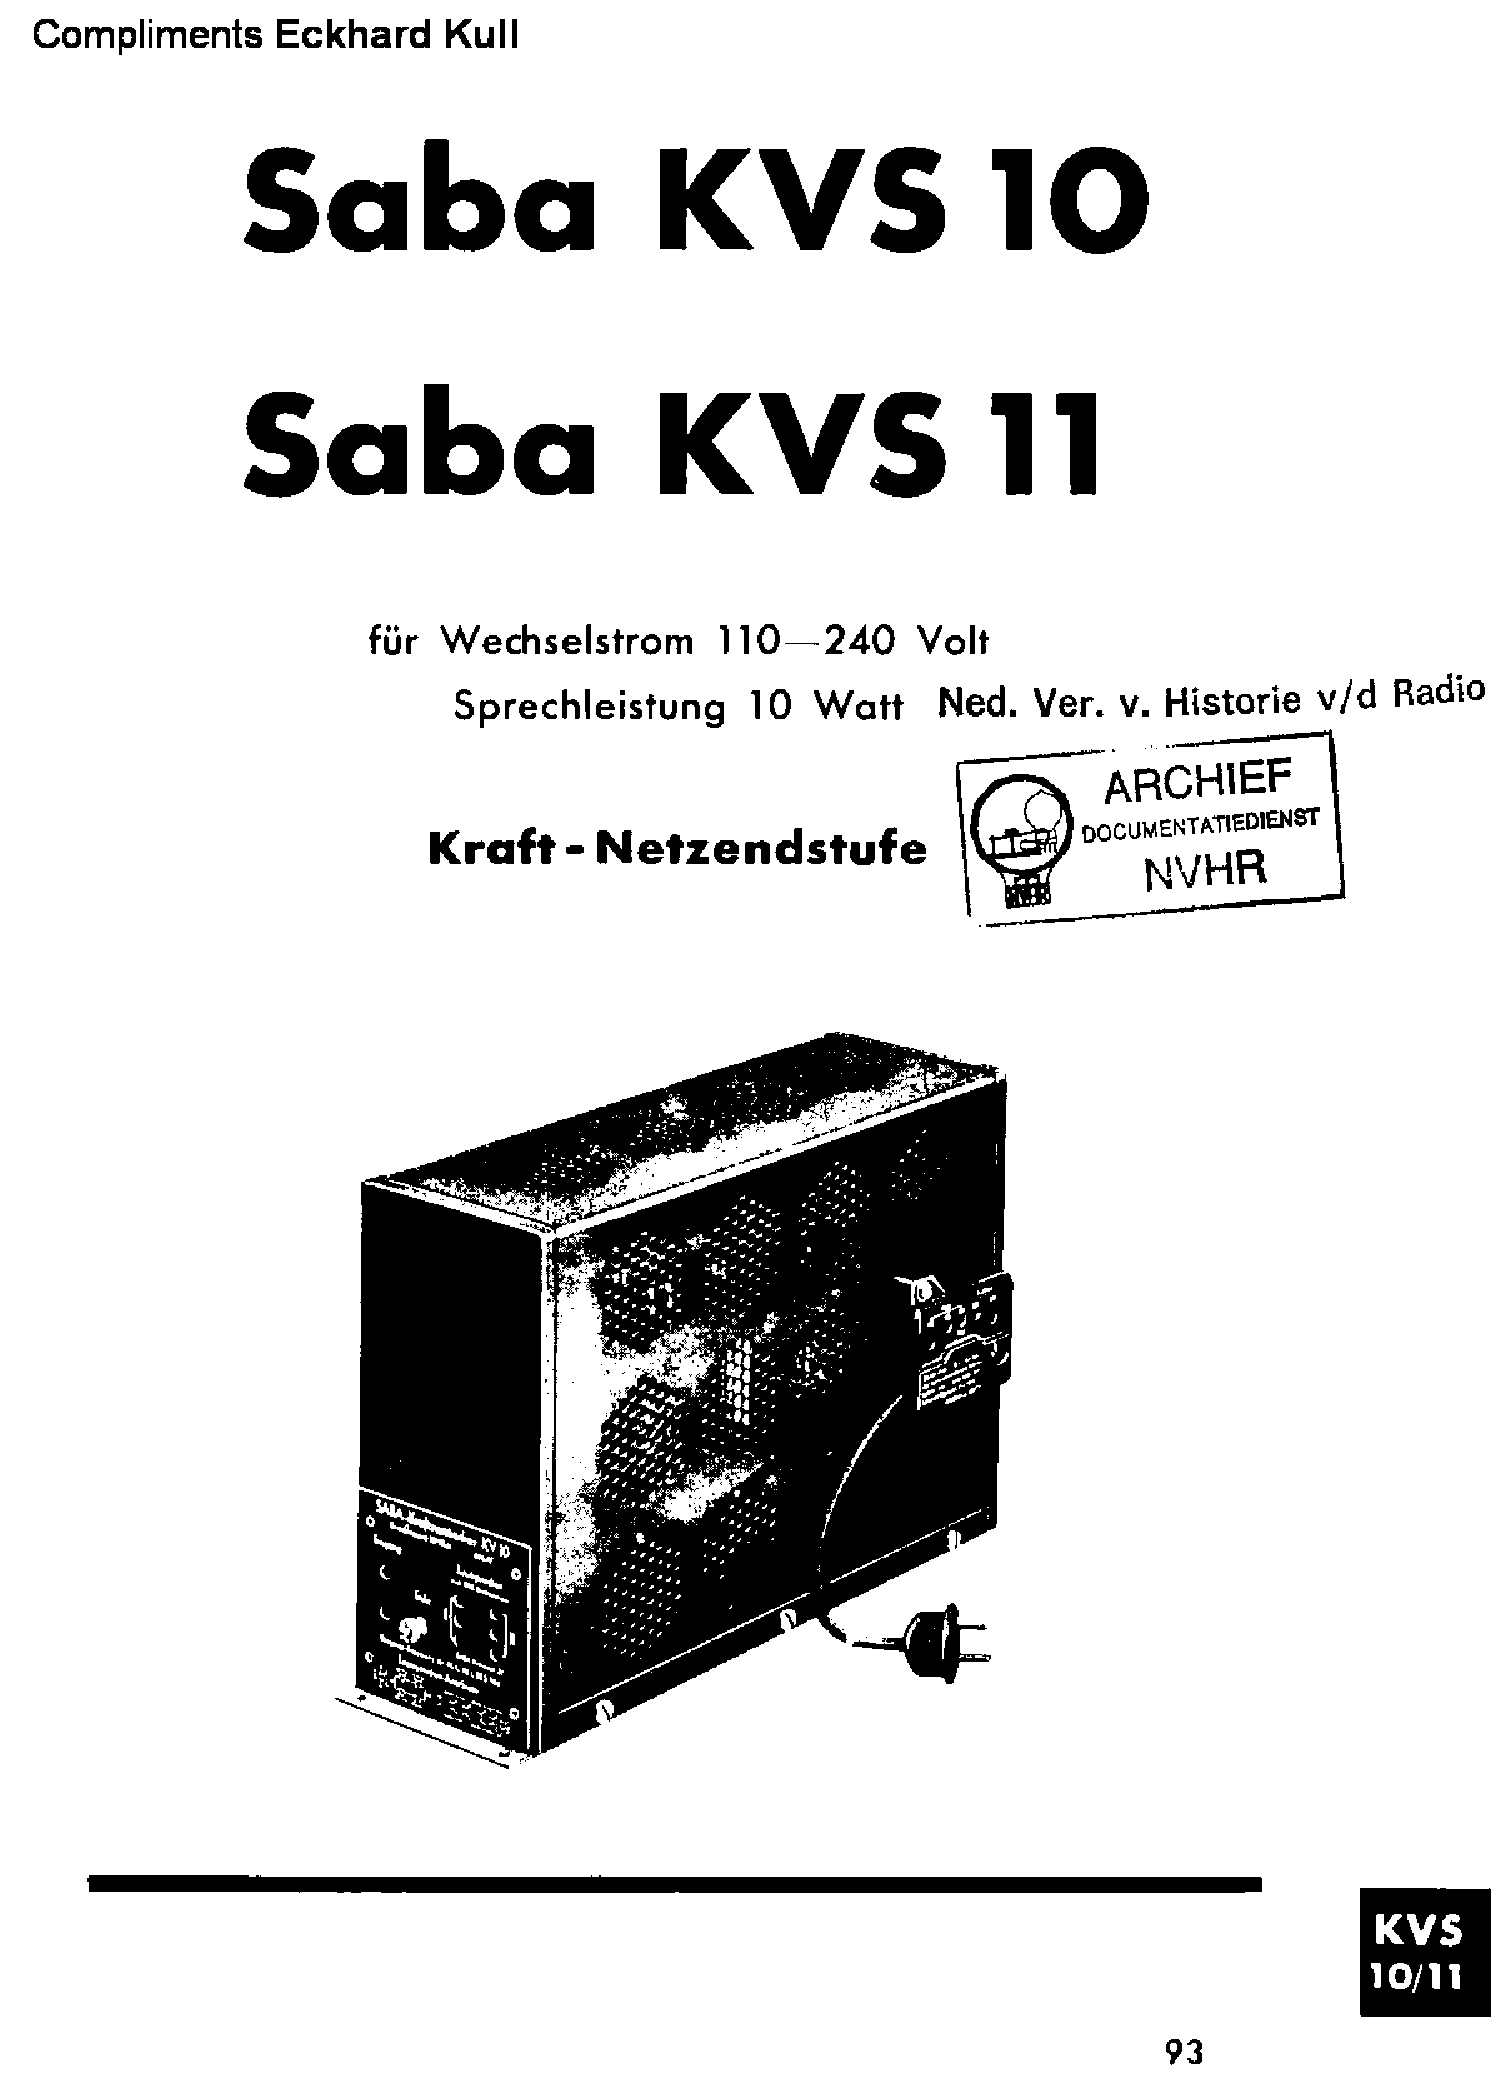 SABA KVS10 2XAD01 10W MAINS AUDIO PA SCH service manual (1st page)